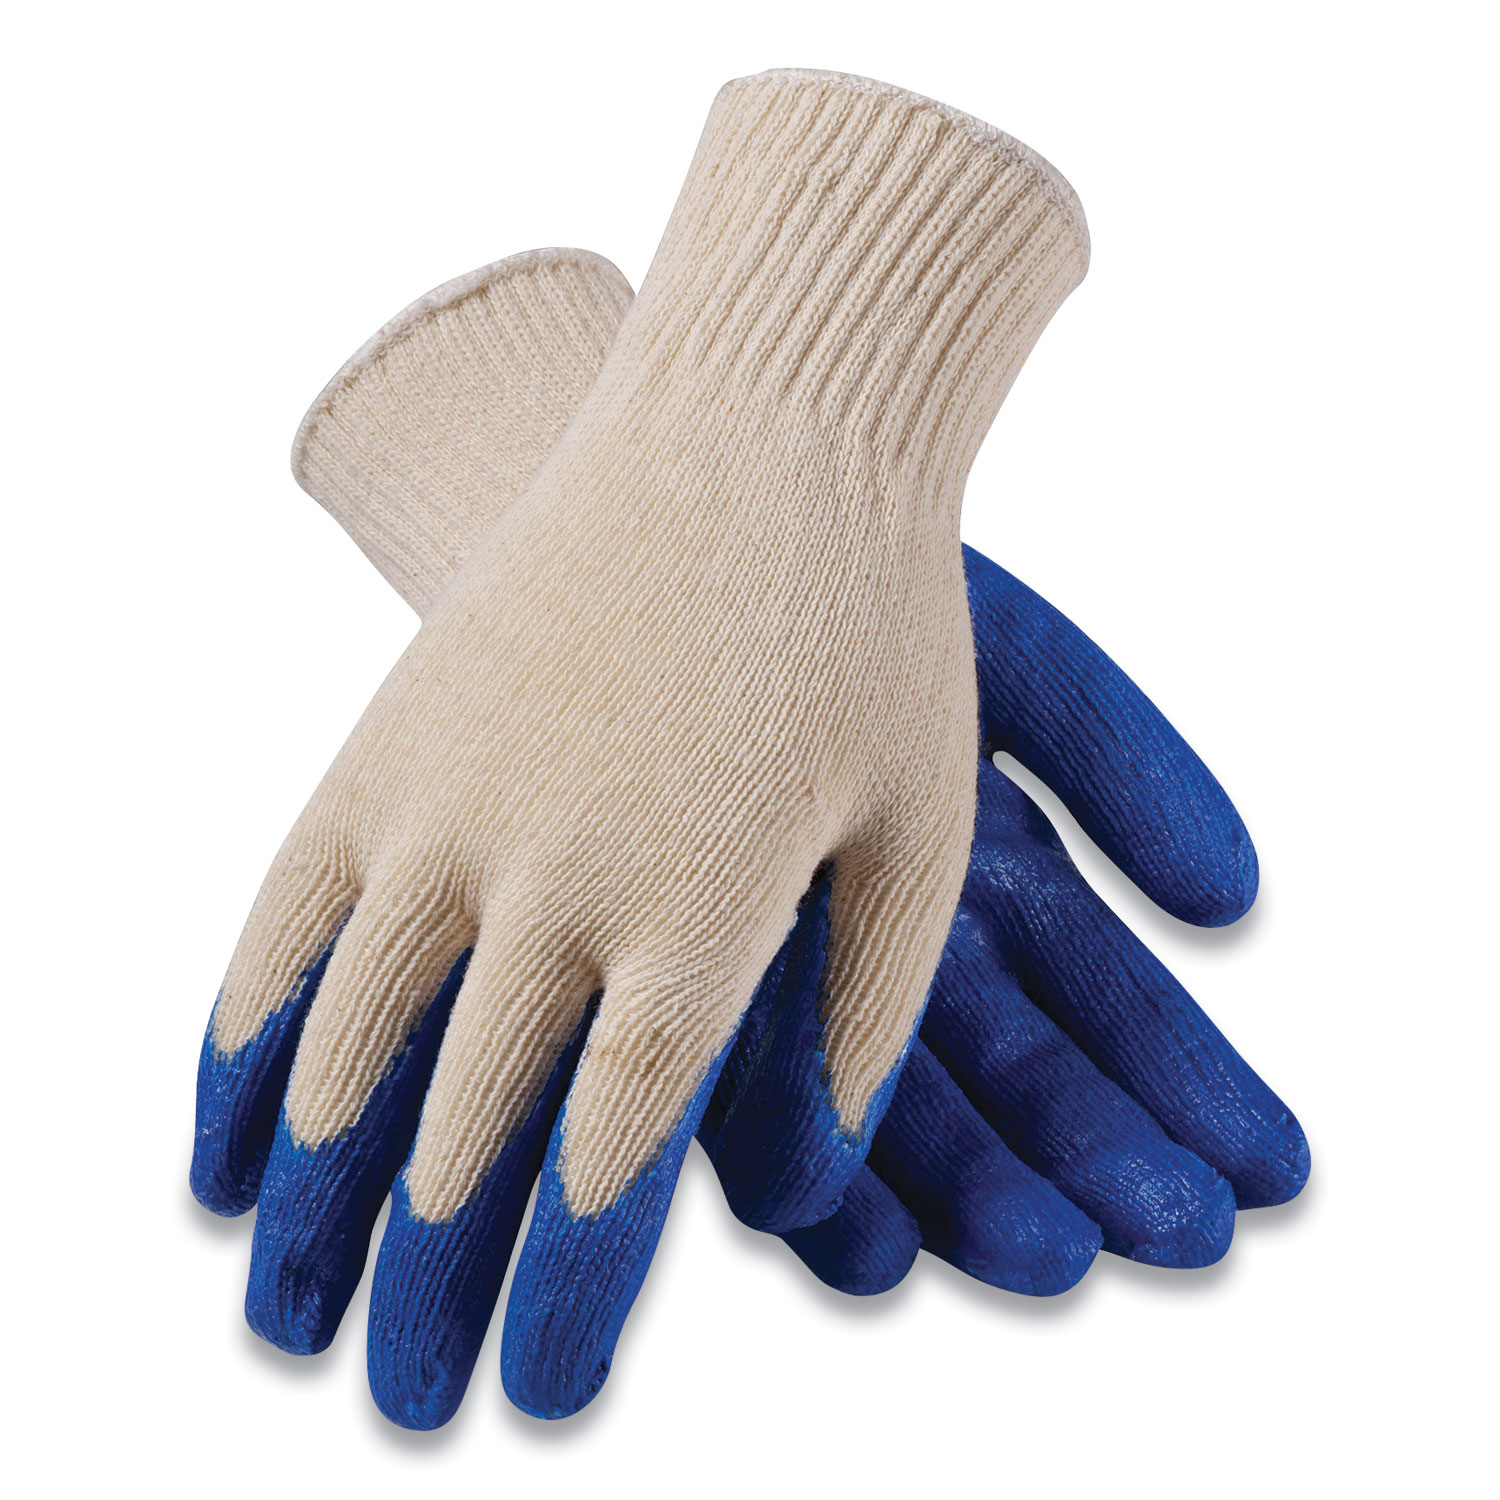  PIP 39-C122/XL Seamless Knit Cotton/Polyester Gloves, Regular Grade, X-Large, White/Blue, 12 Pairs (PID179727) 